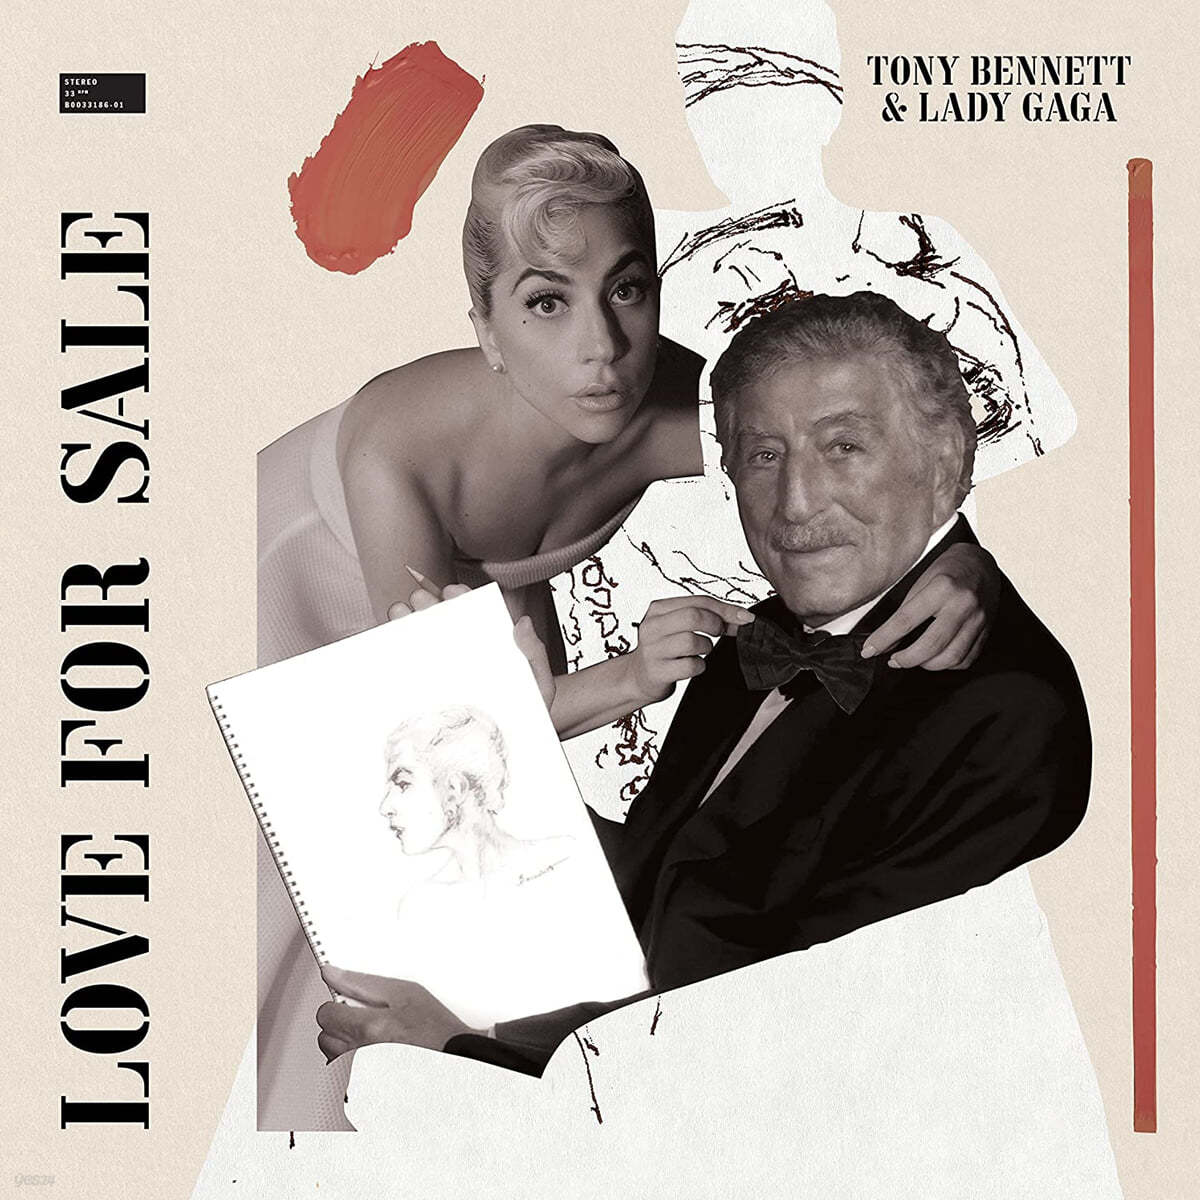 Tony Bennett / Lady Gaga (토니 베넷 / 레이디 가가) - Love for Sale 